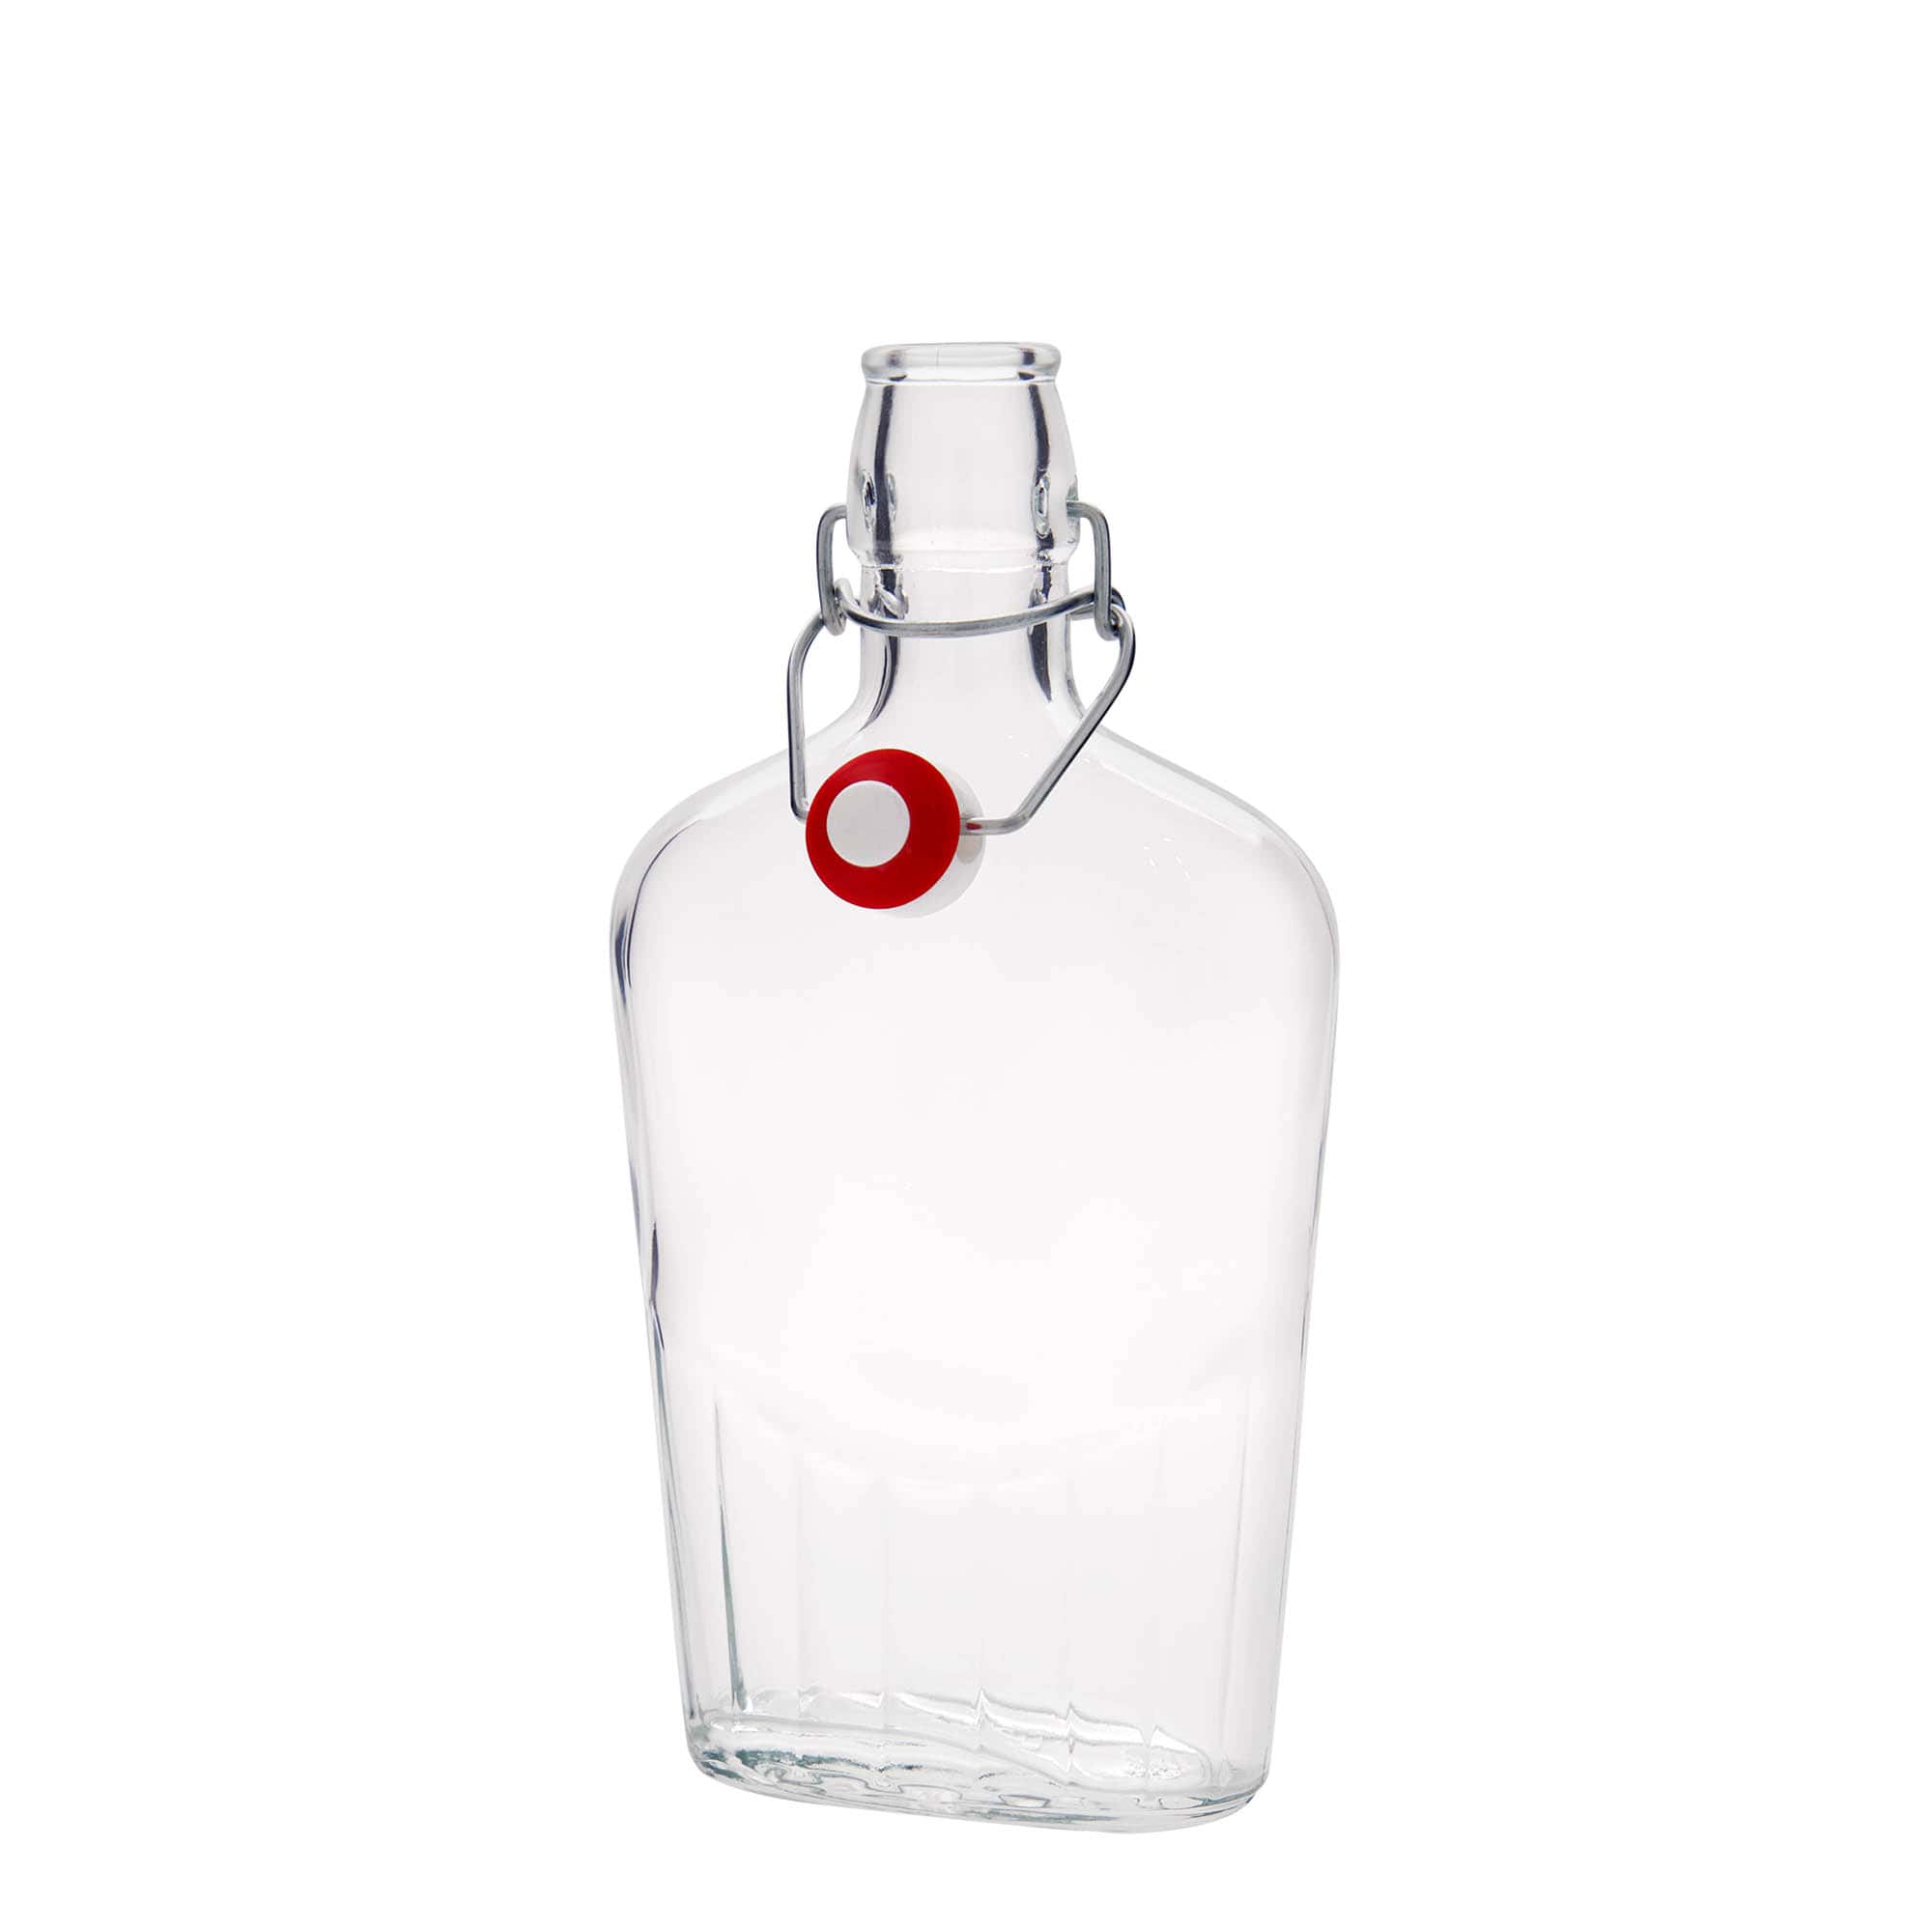 500 ml glass bottle 'Fiaschetta', oval, closure: swing top